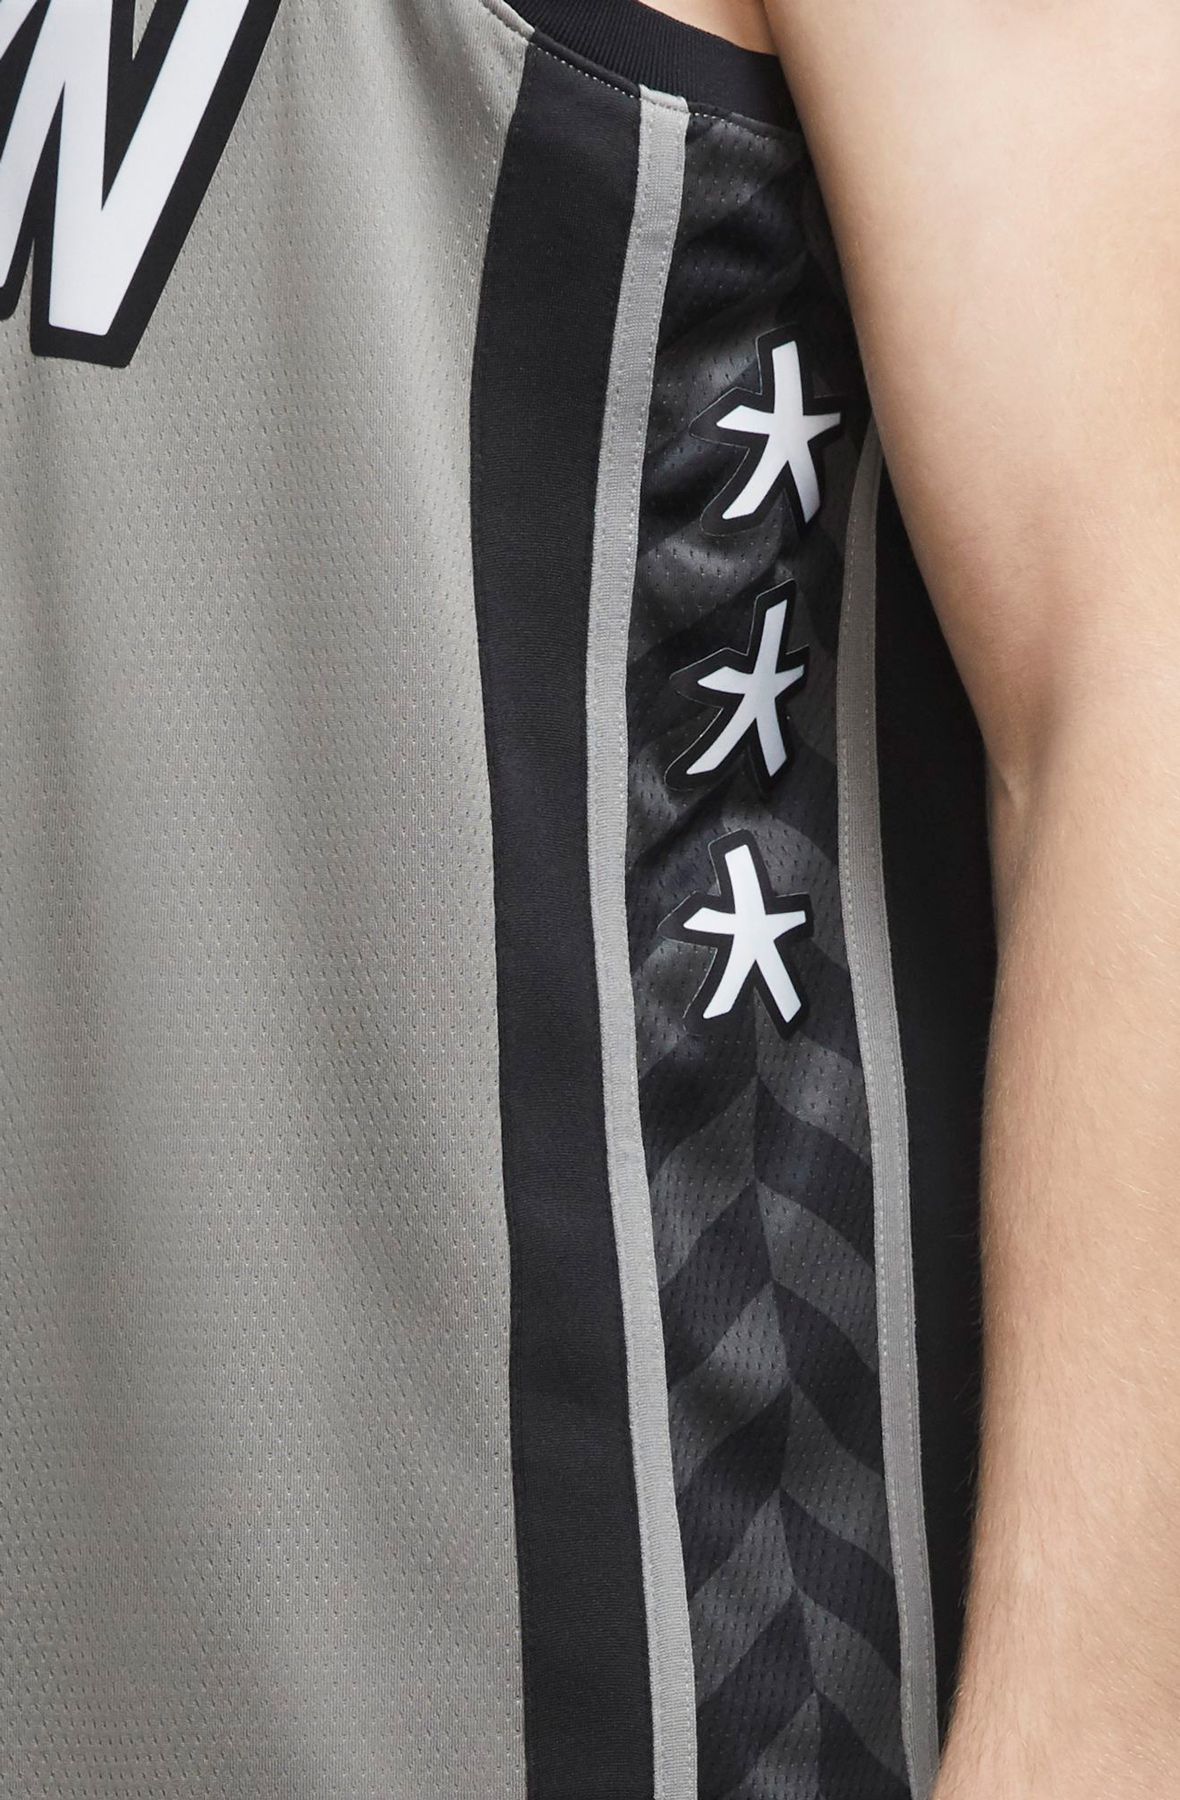 Kevin Durant Brooklyn Nets Jordan Brand Statement Swingman Jersey  Men's Medium